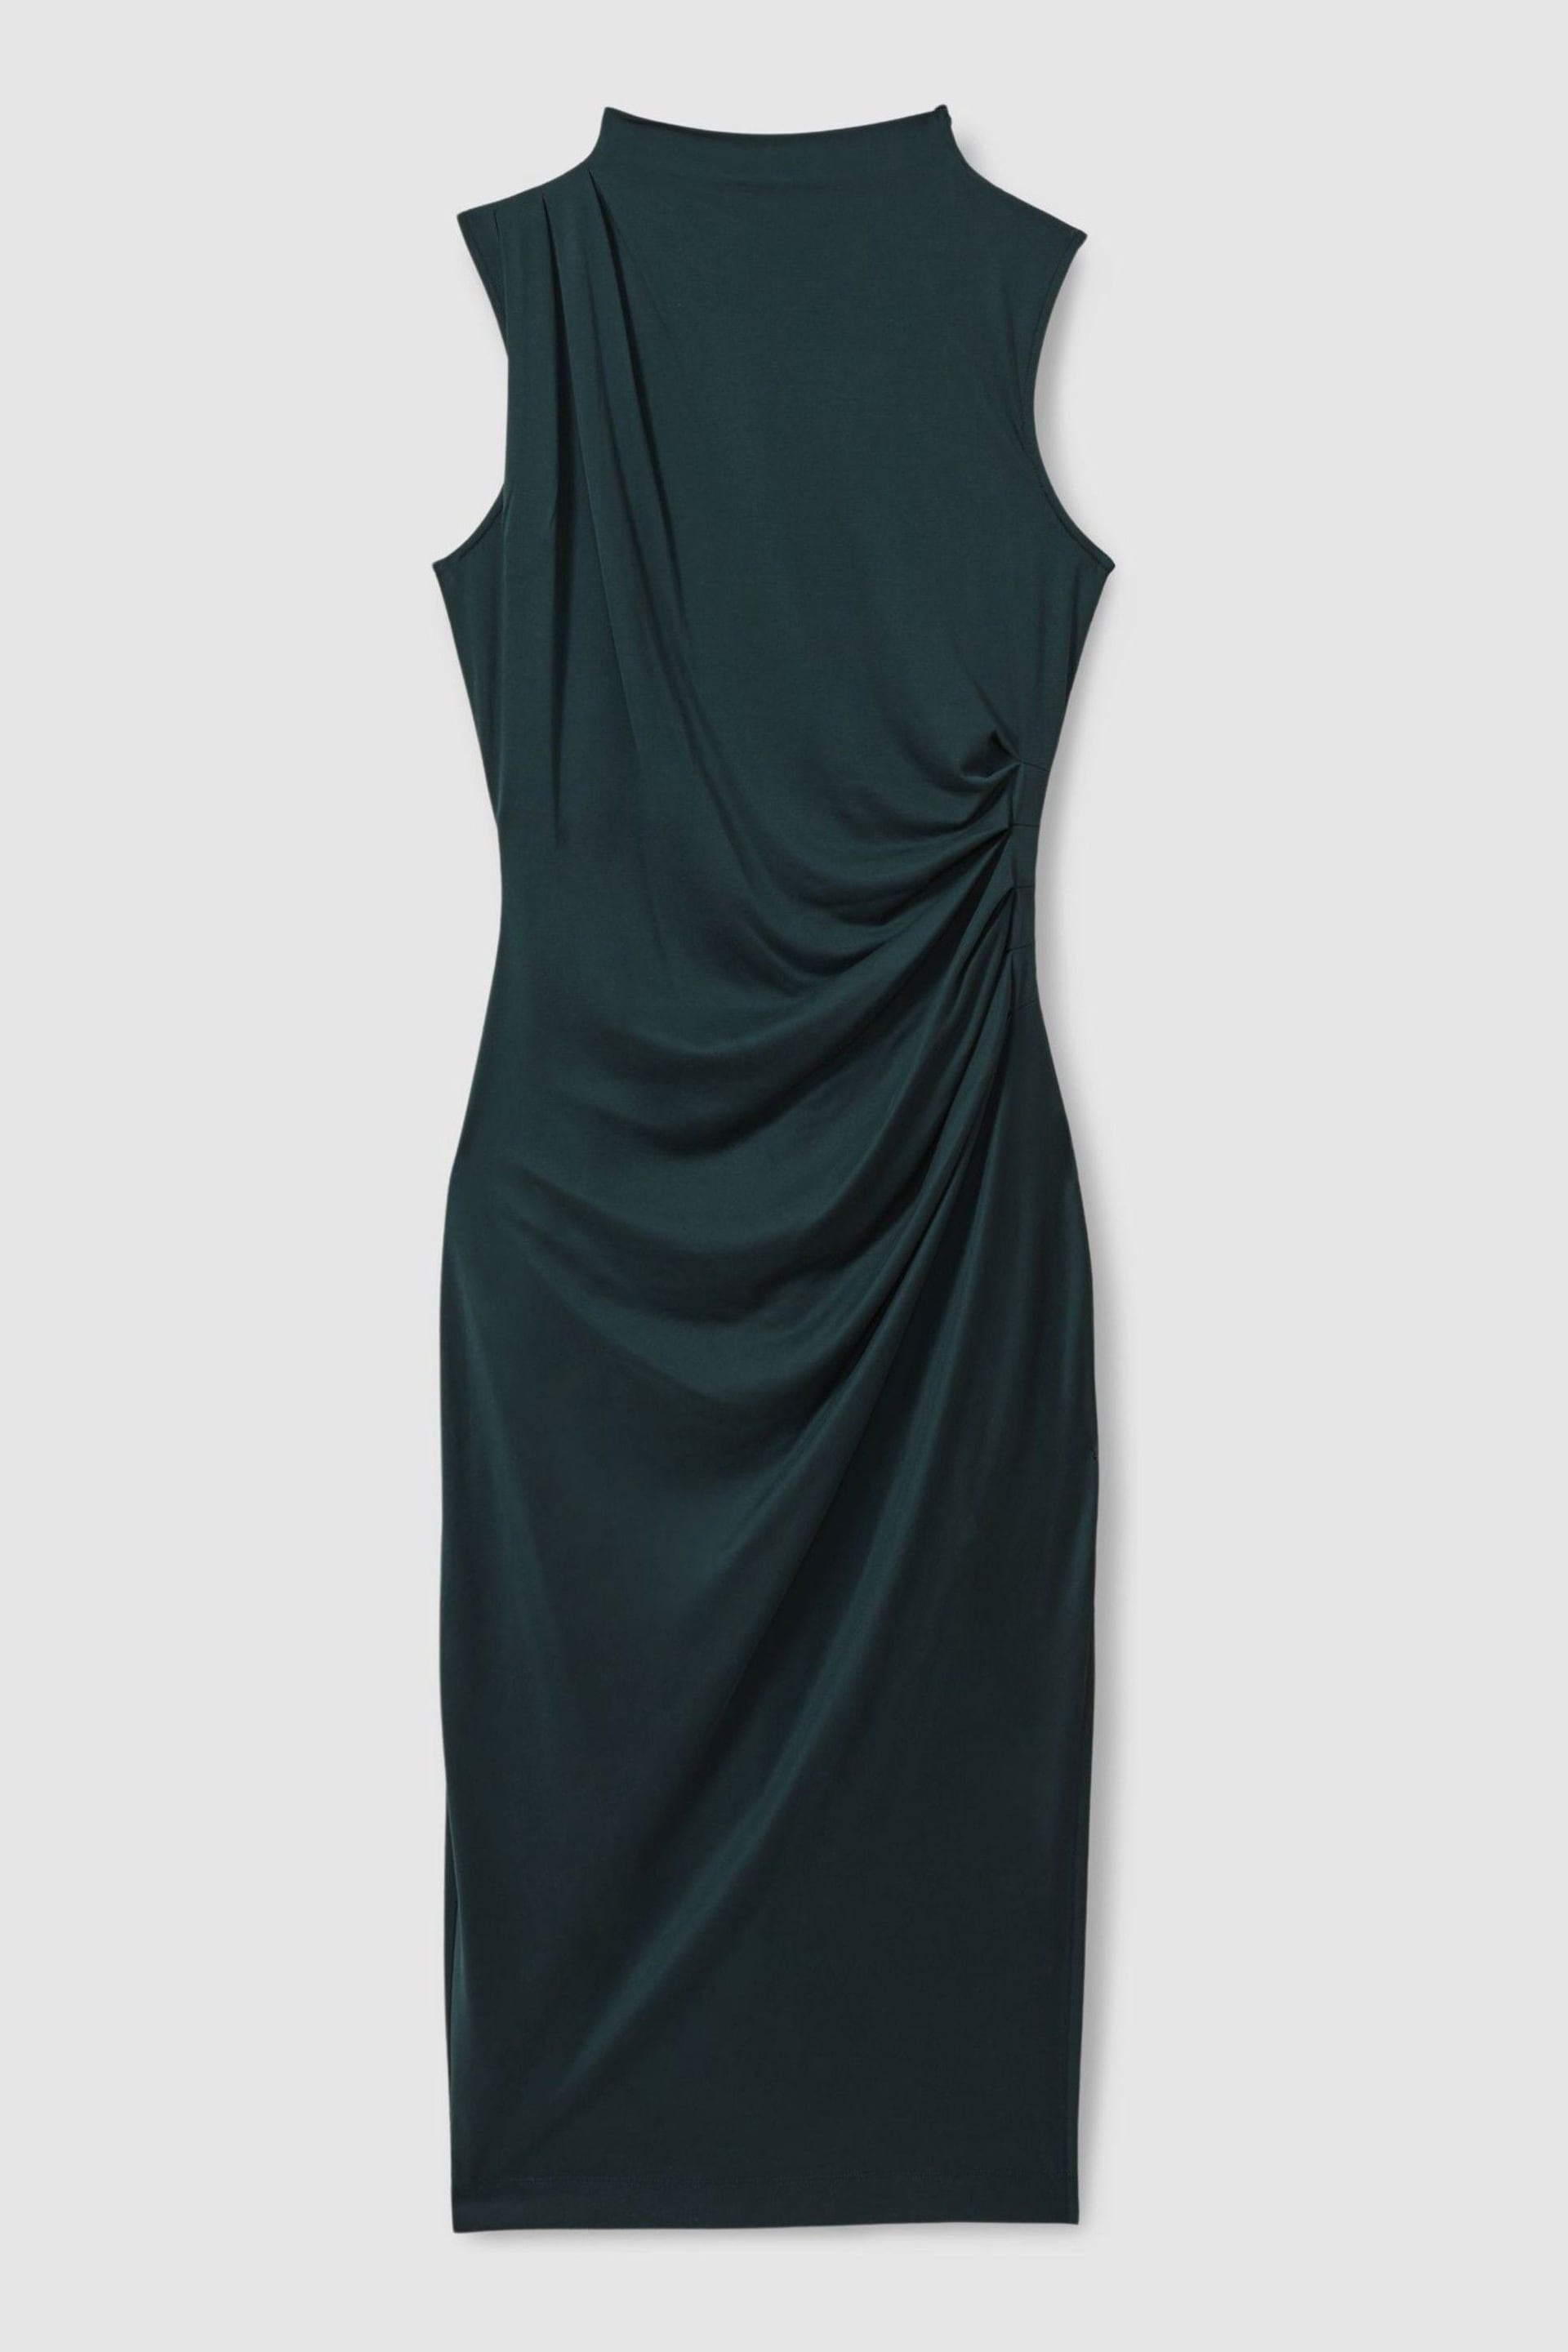 Reiss Dark Green Beaux Modal Blend Ruched Midi Dress - Image 2 of 6